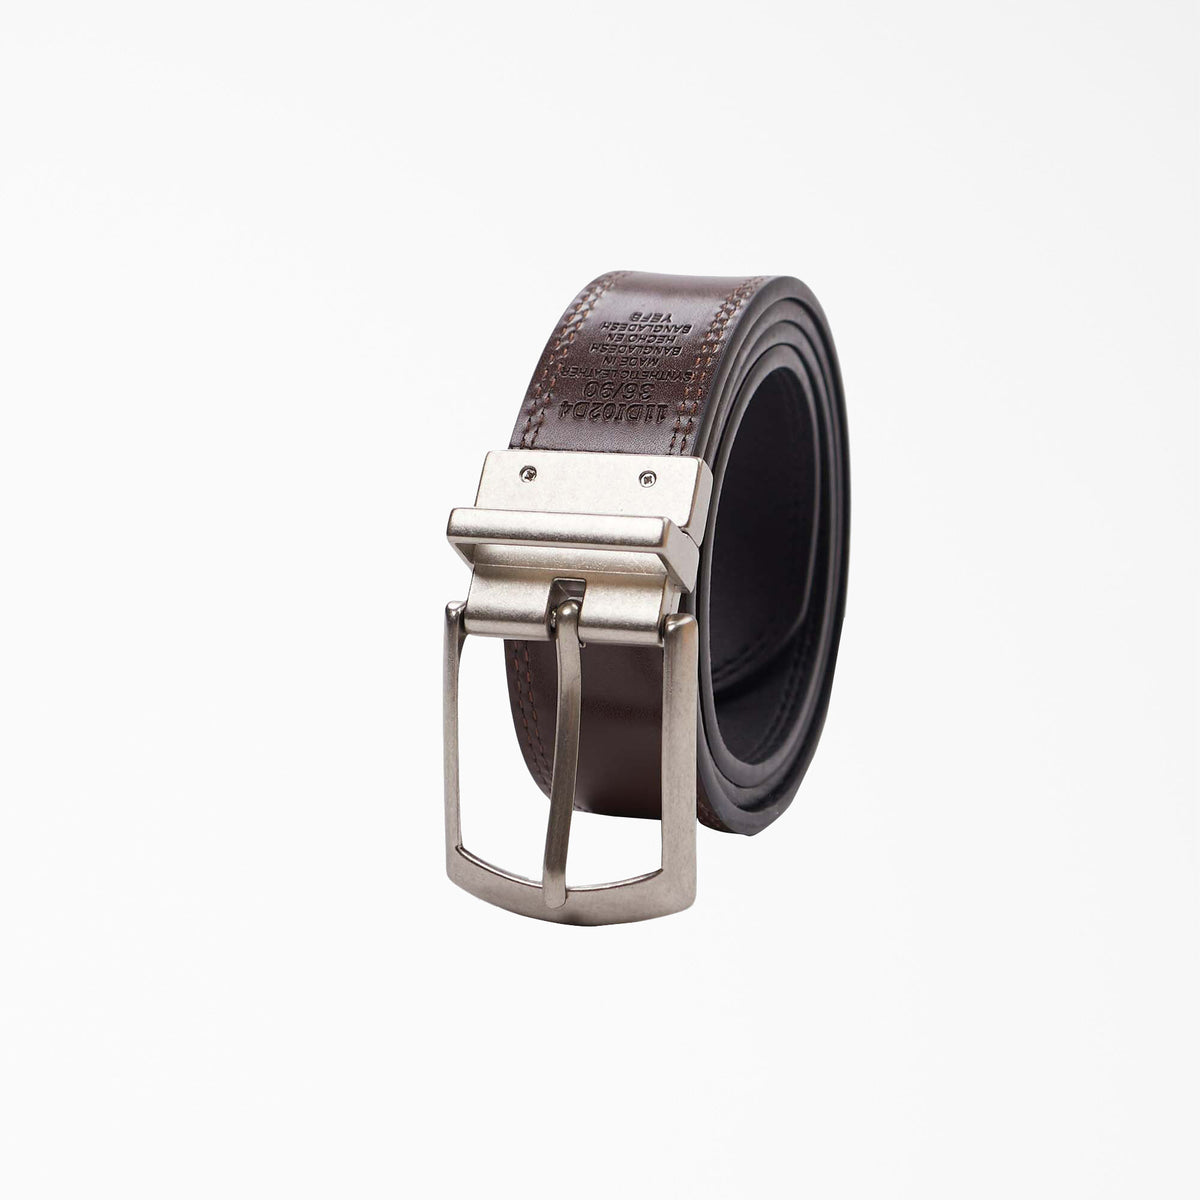 Dickies Men's Leather Reversible Belt